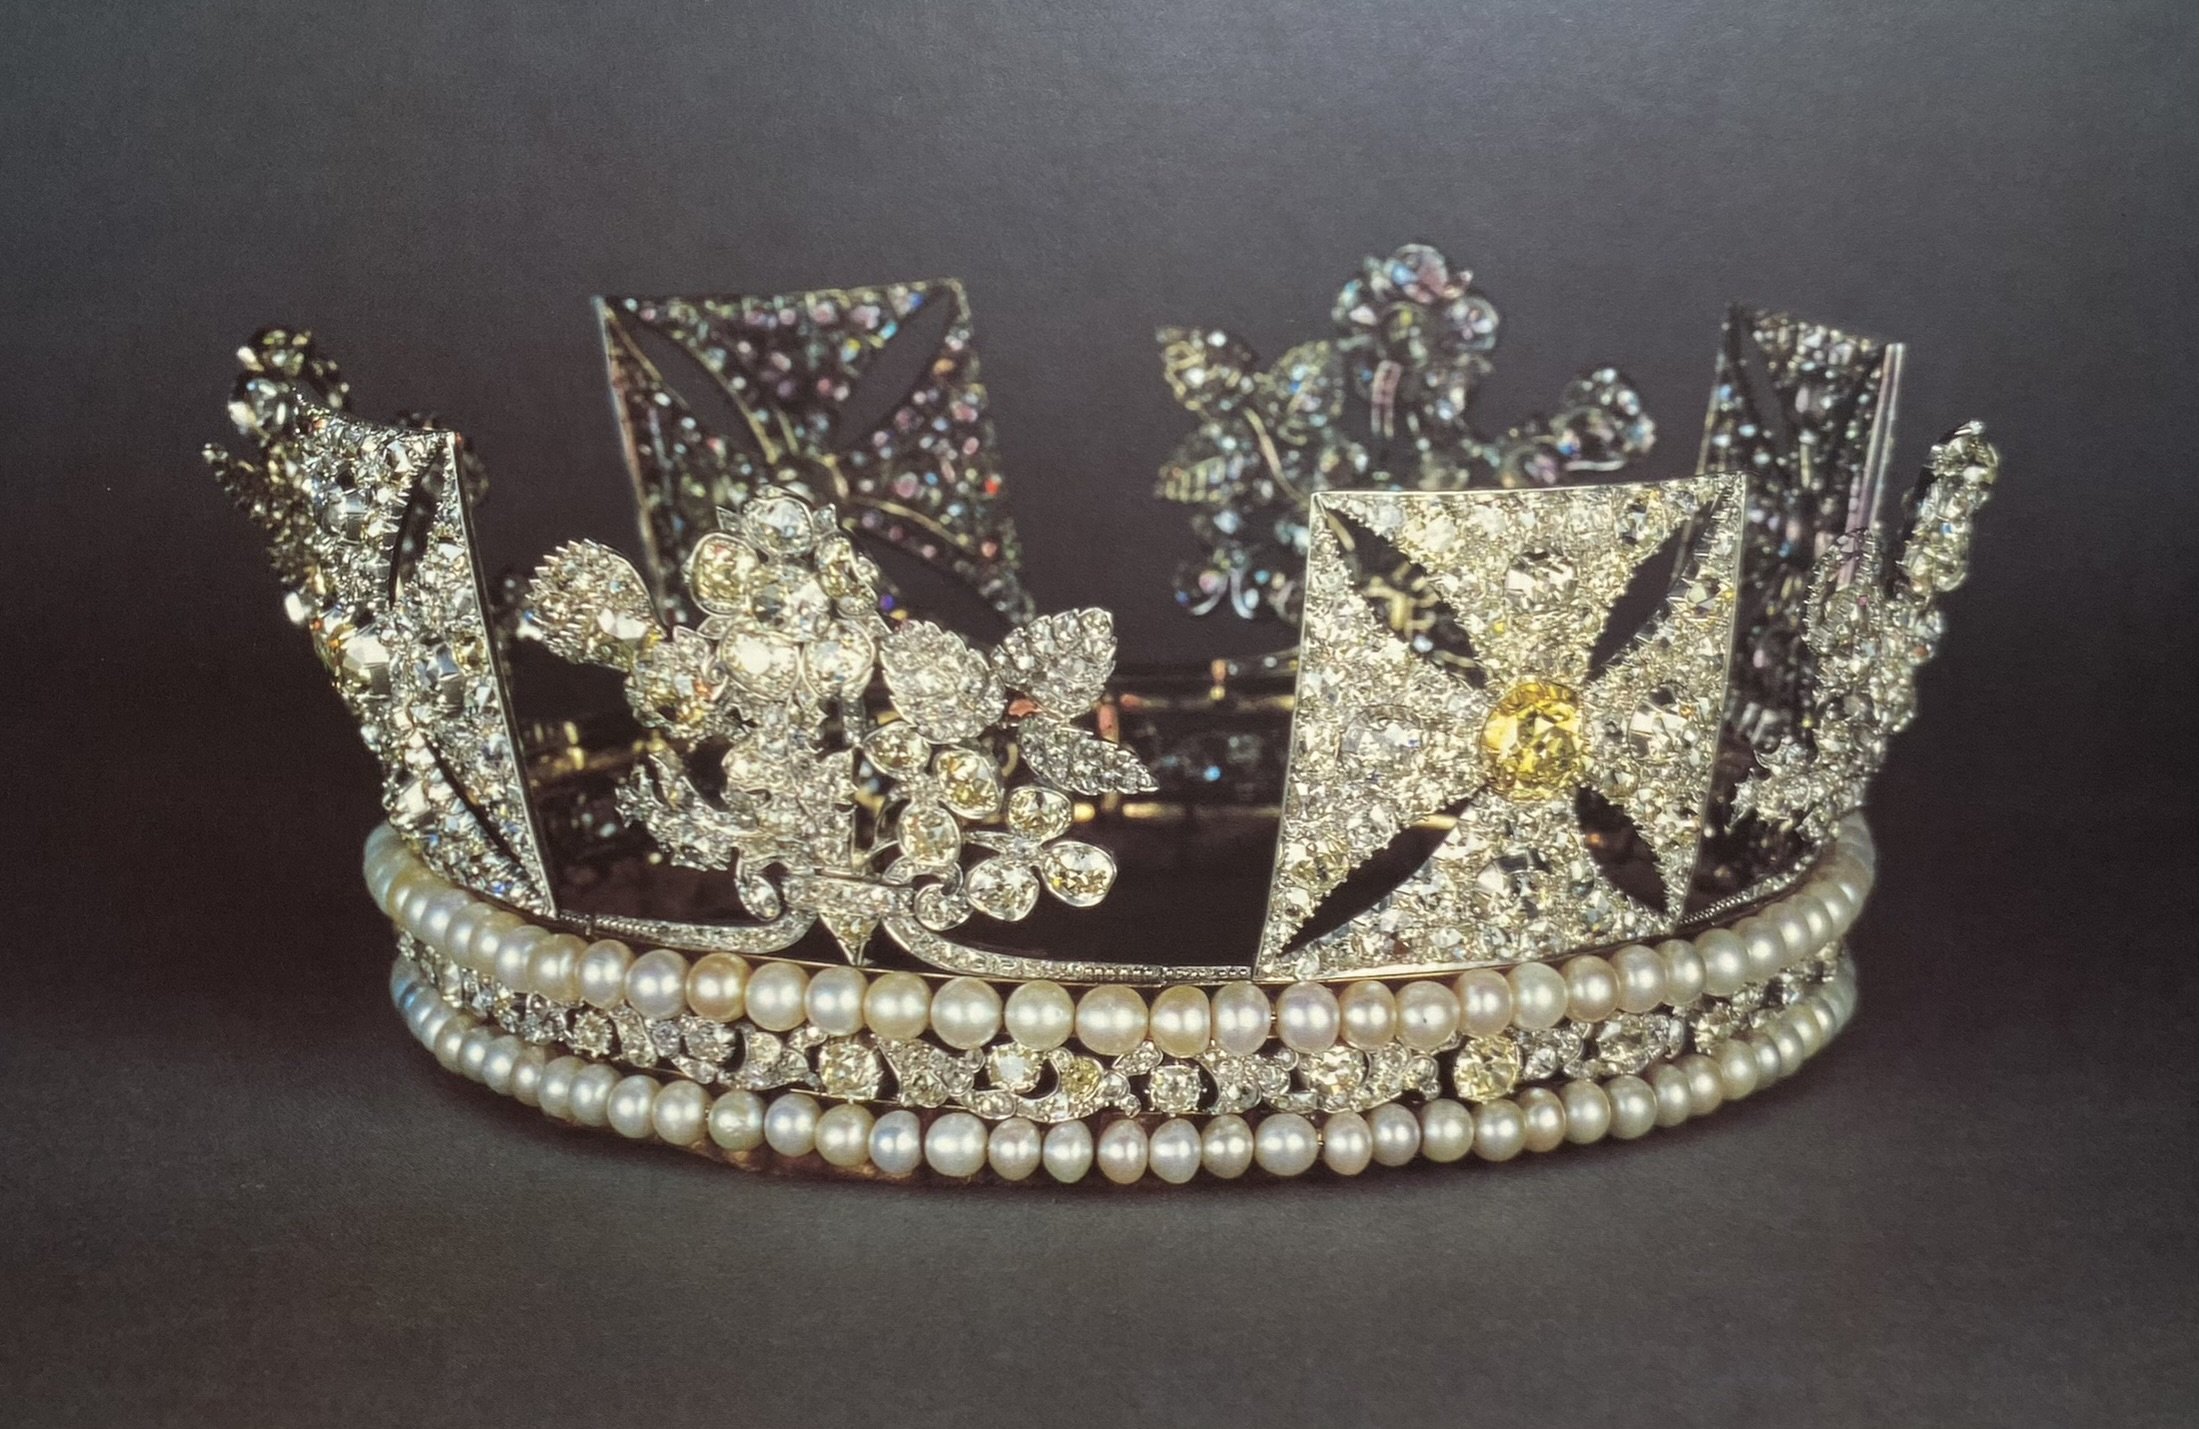 George IV’s Diadem - "The Diamond Diadem"